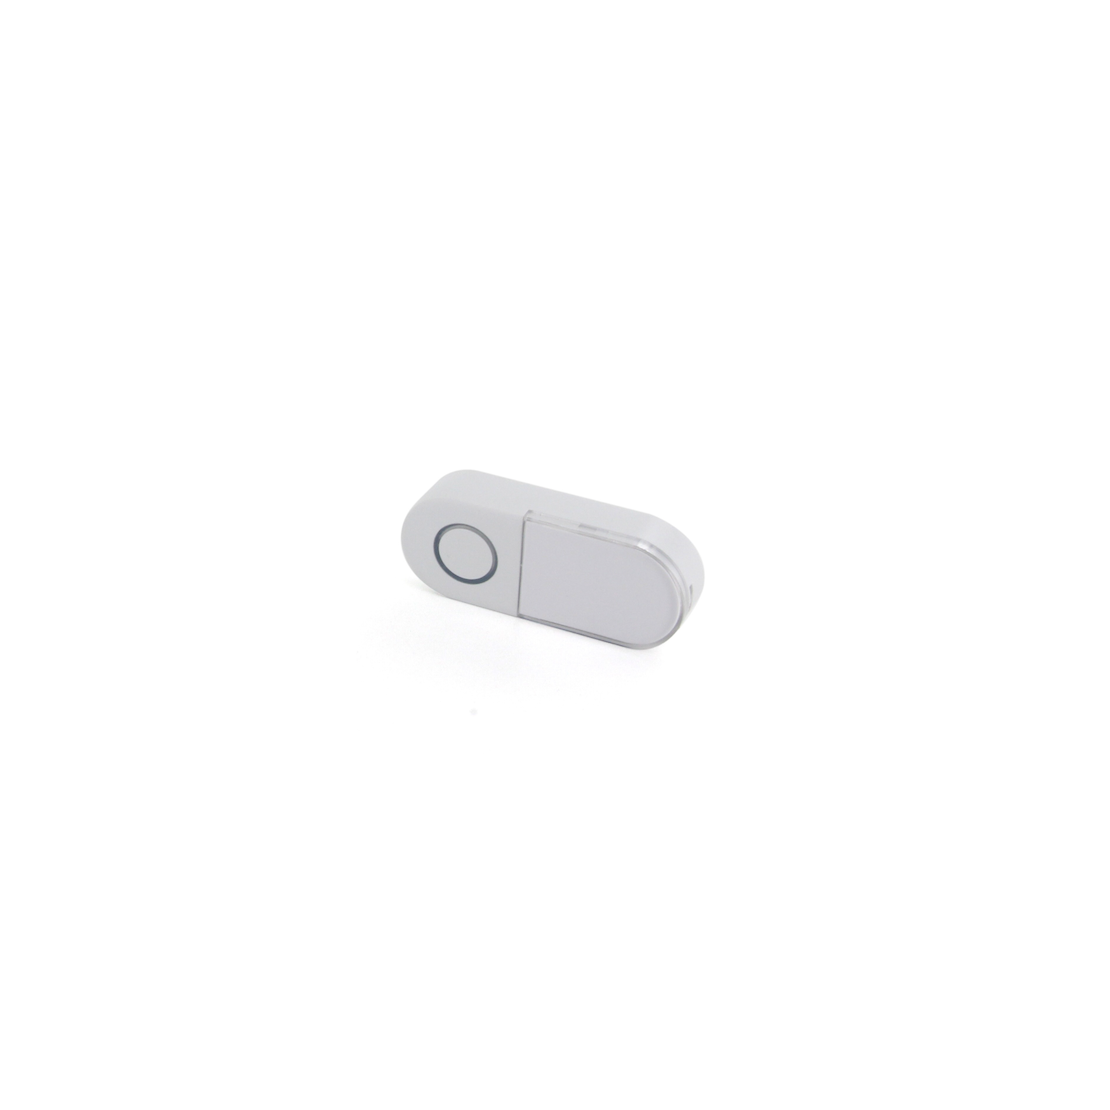 Wireless push button - DiO